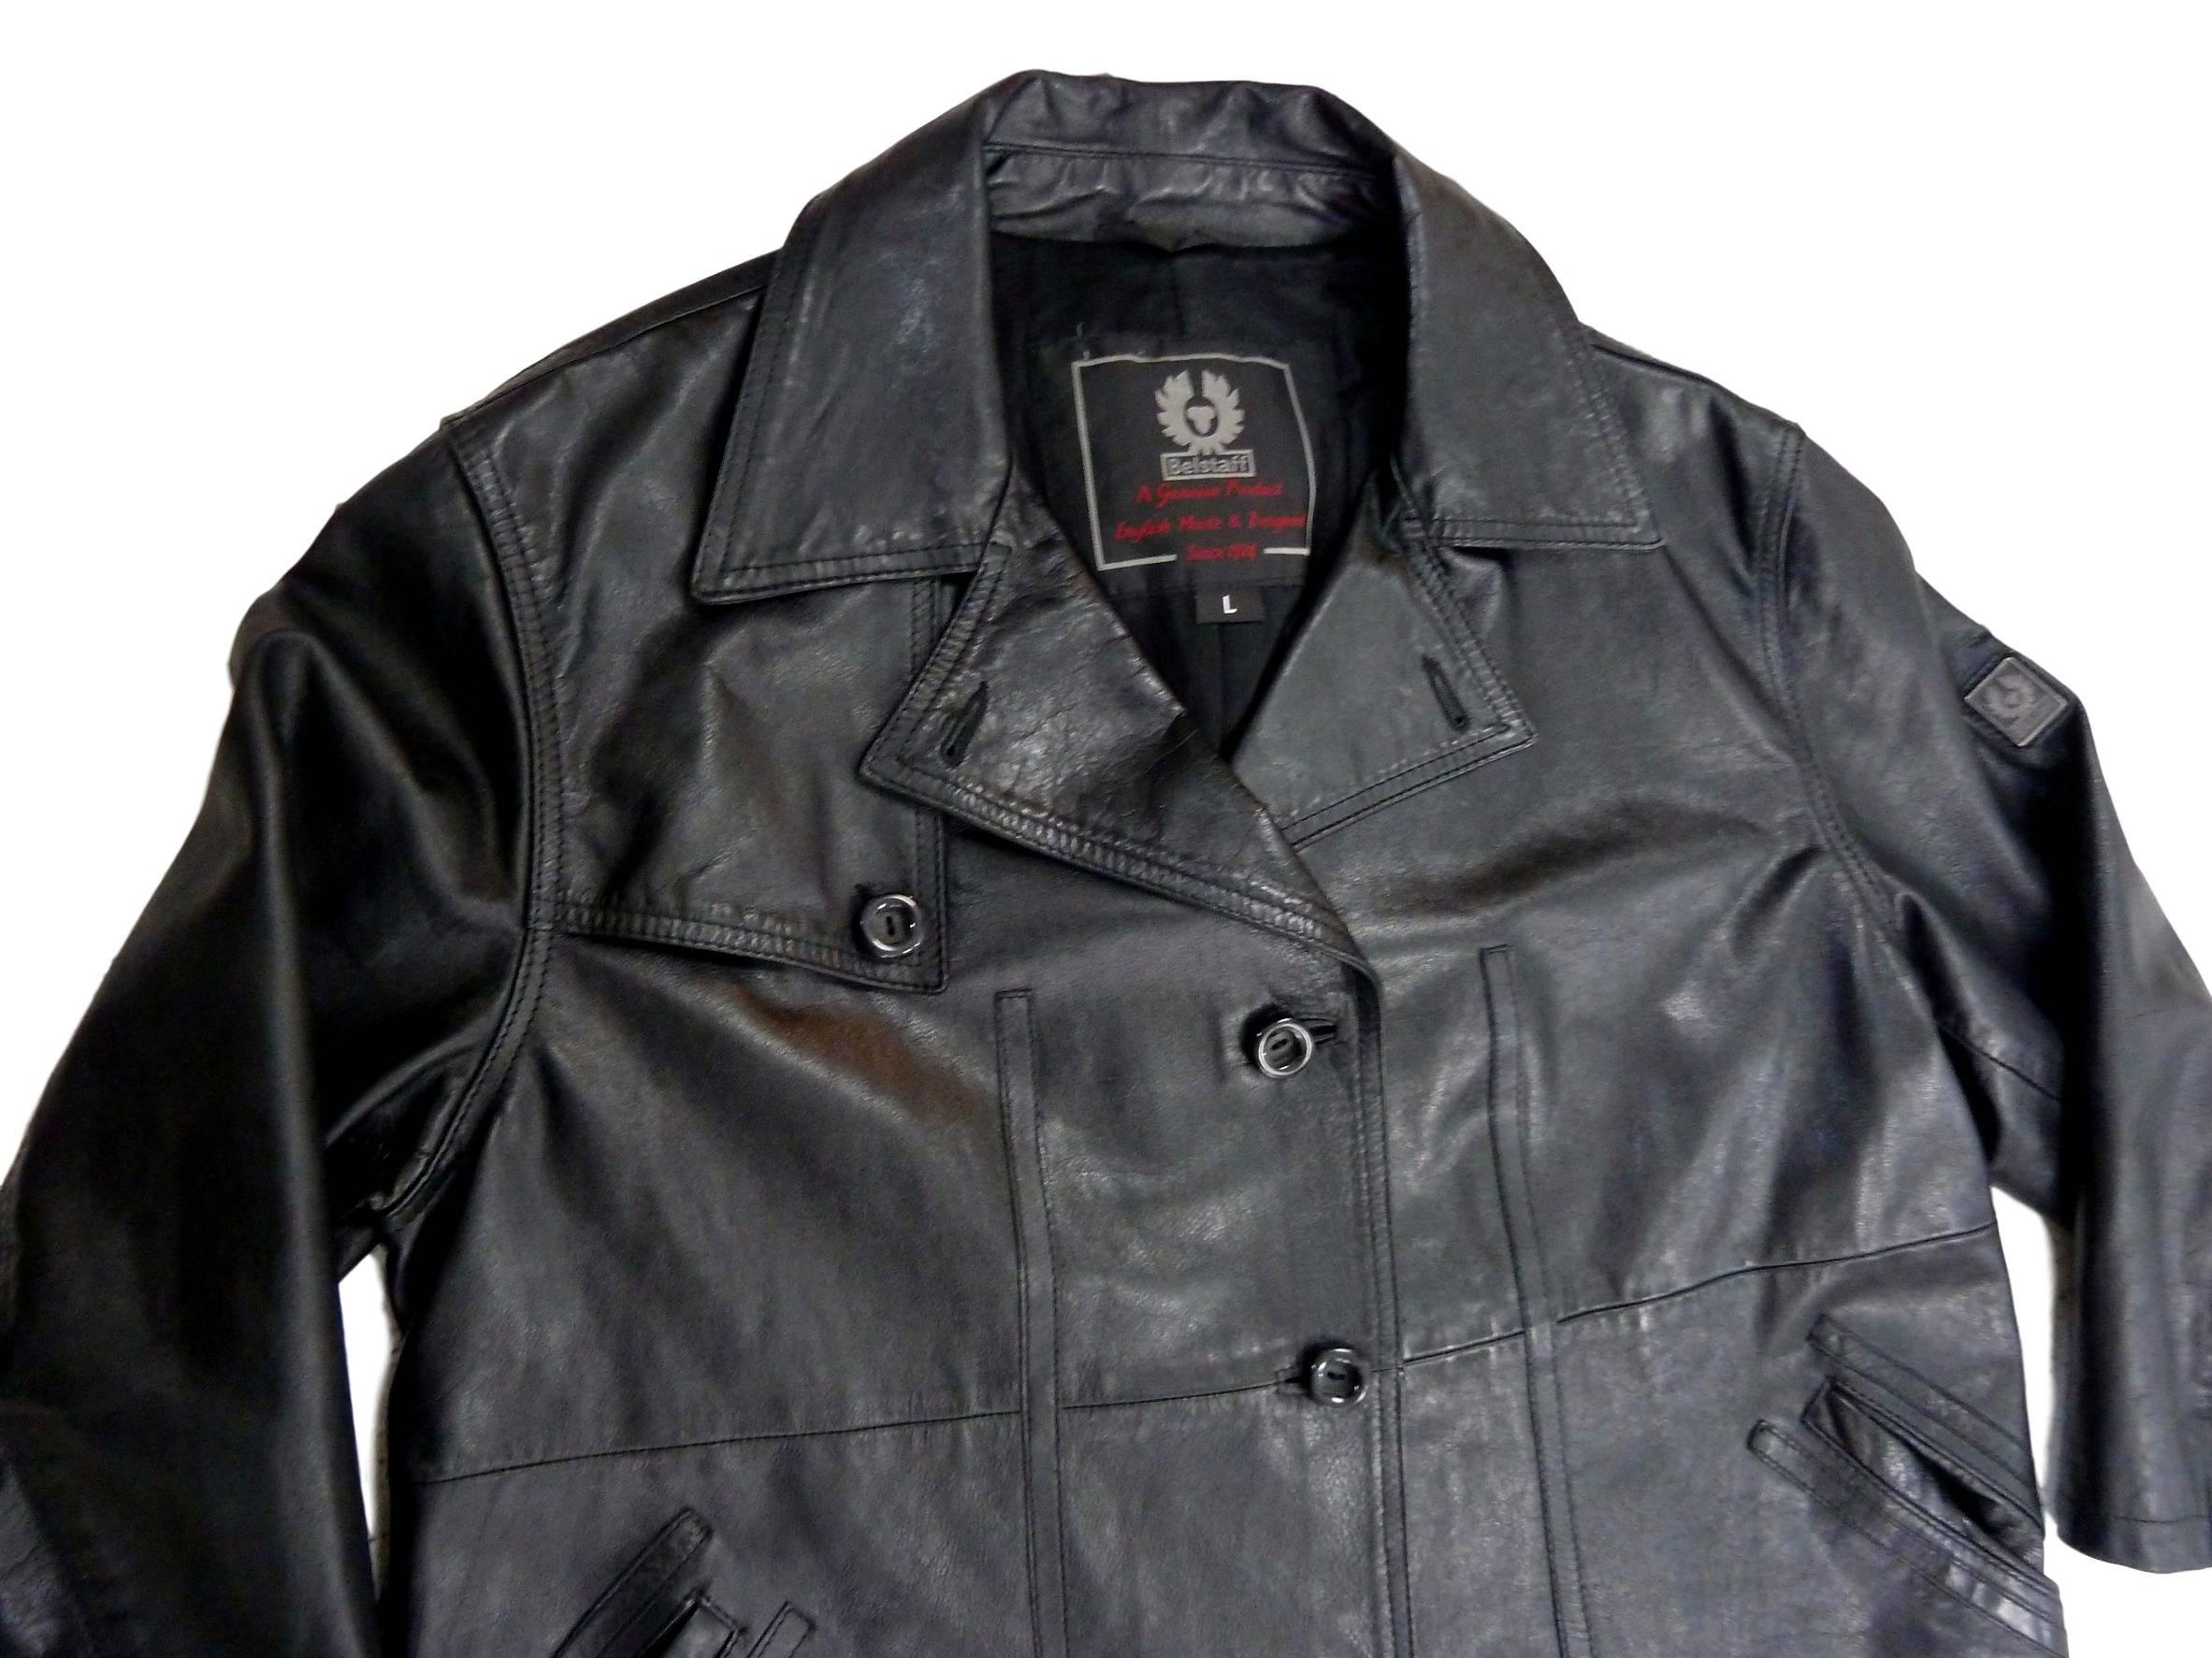 Black Belstaff Gold Label leather coat black men's motorcycle style size L 